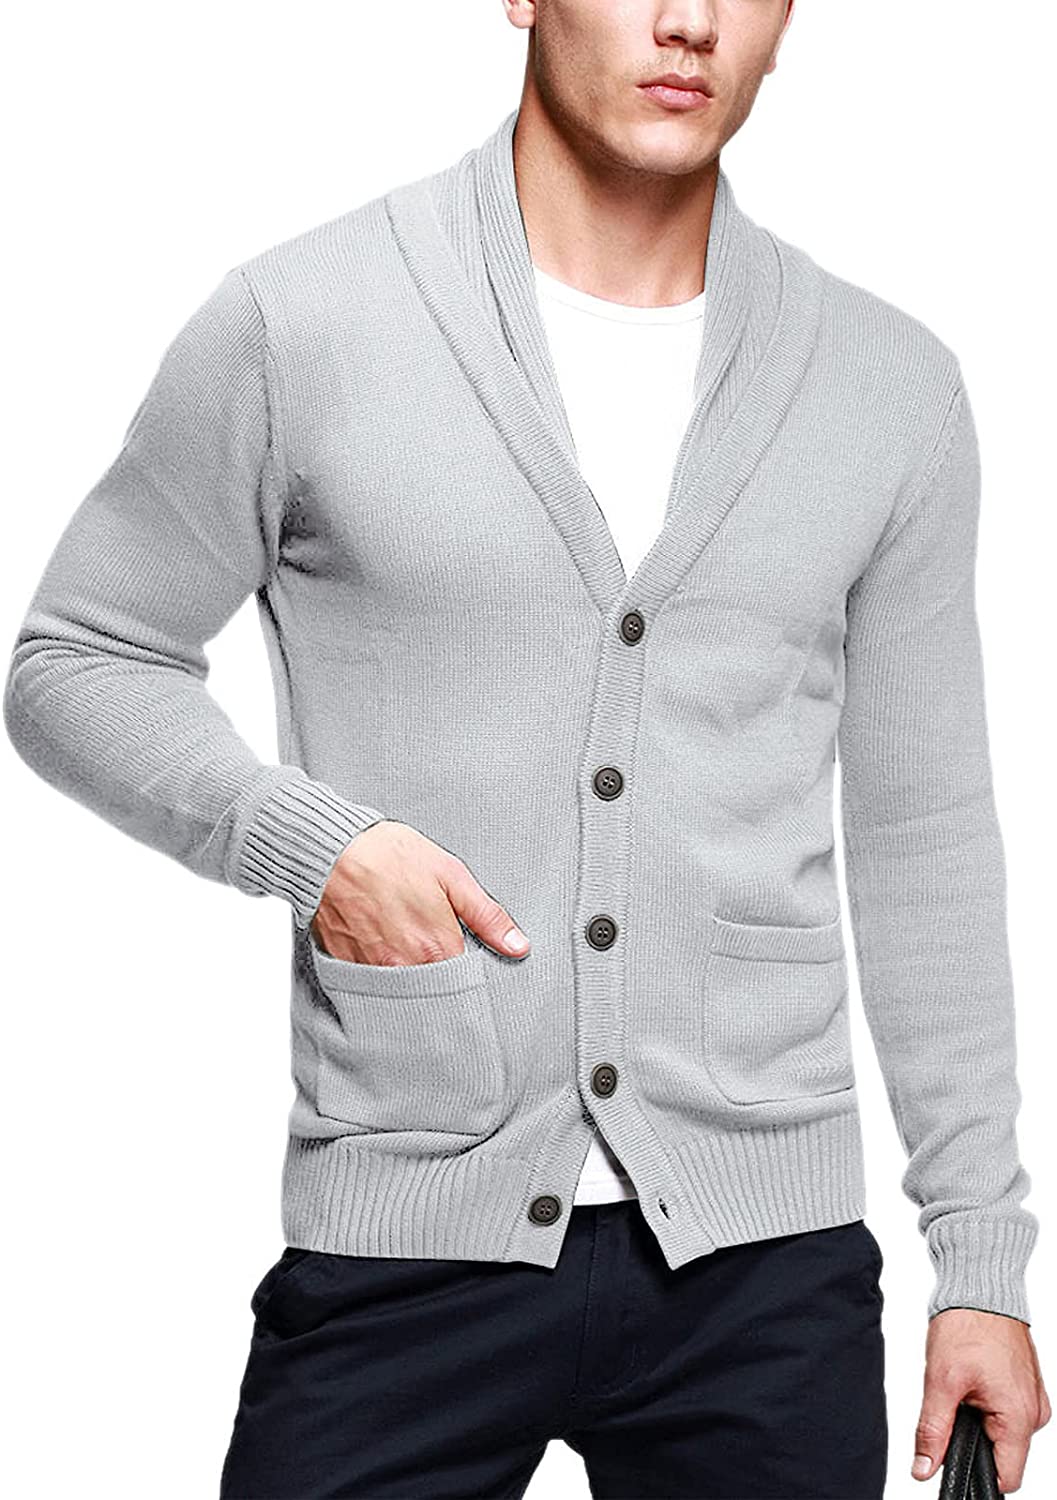 Match Mens Knitwear Shawl Collar Cardigan Sweater with Ribbing Edge